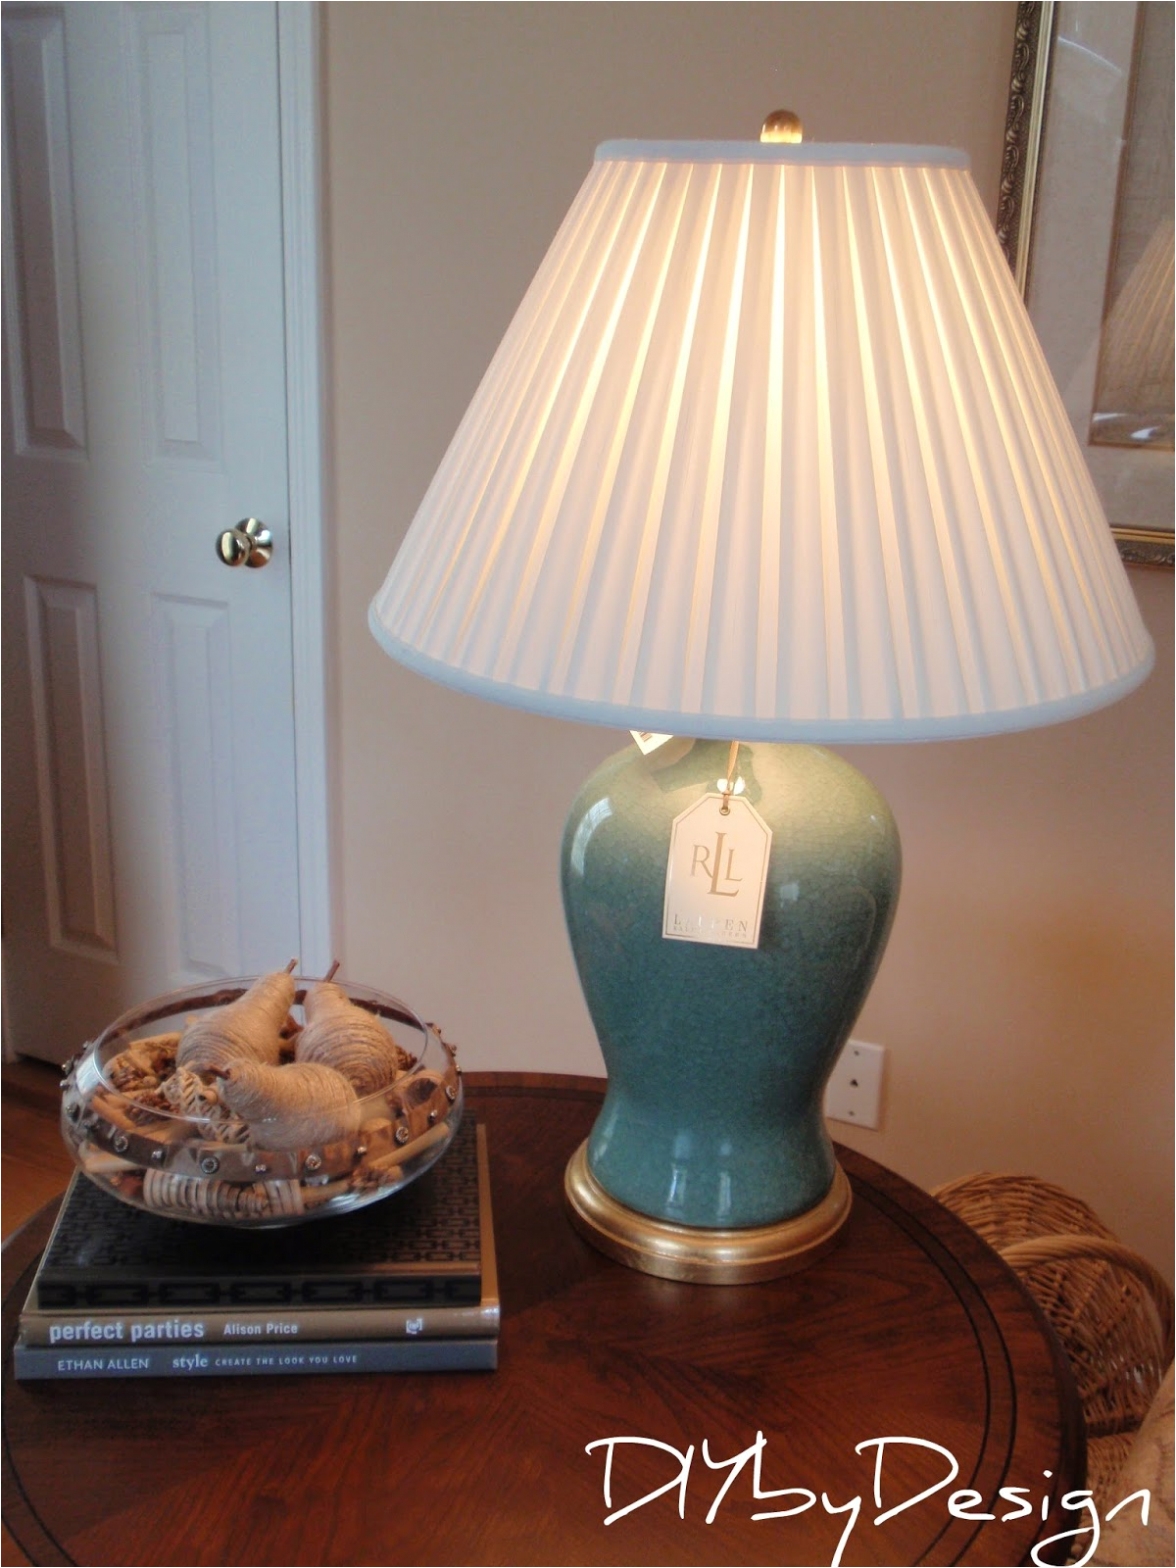 appealing ralph lauren lamps for your residence concept furniture amazing ralph lauren table lamps